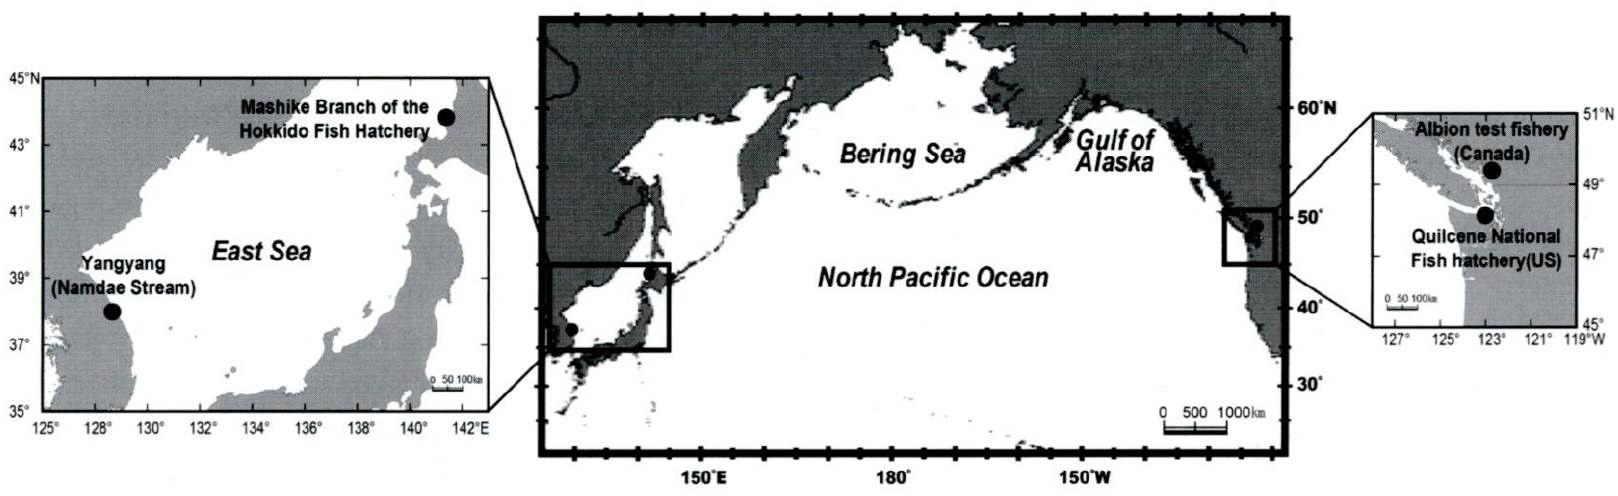 Sampling locations of chum salmon otolith during 1997-1999 spawning seasons